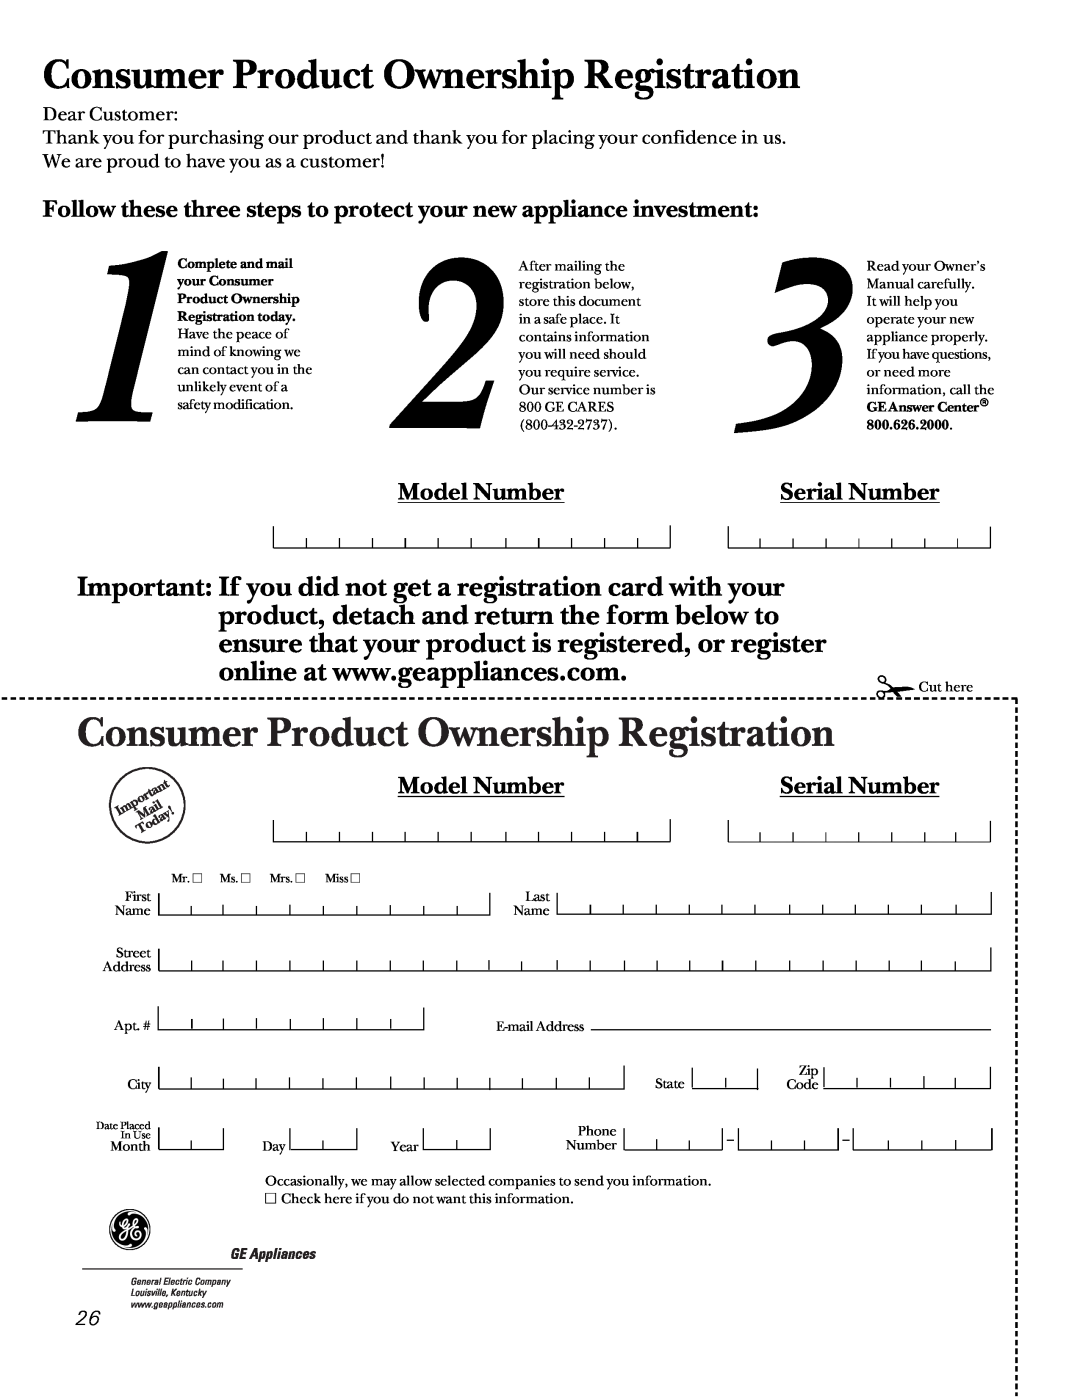 GE JBP26, JBP30, JBP35, JBP24 owner manual Model Number, Serial Number, Consumer Product Ownership Registration 